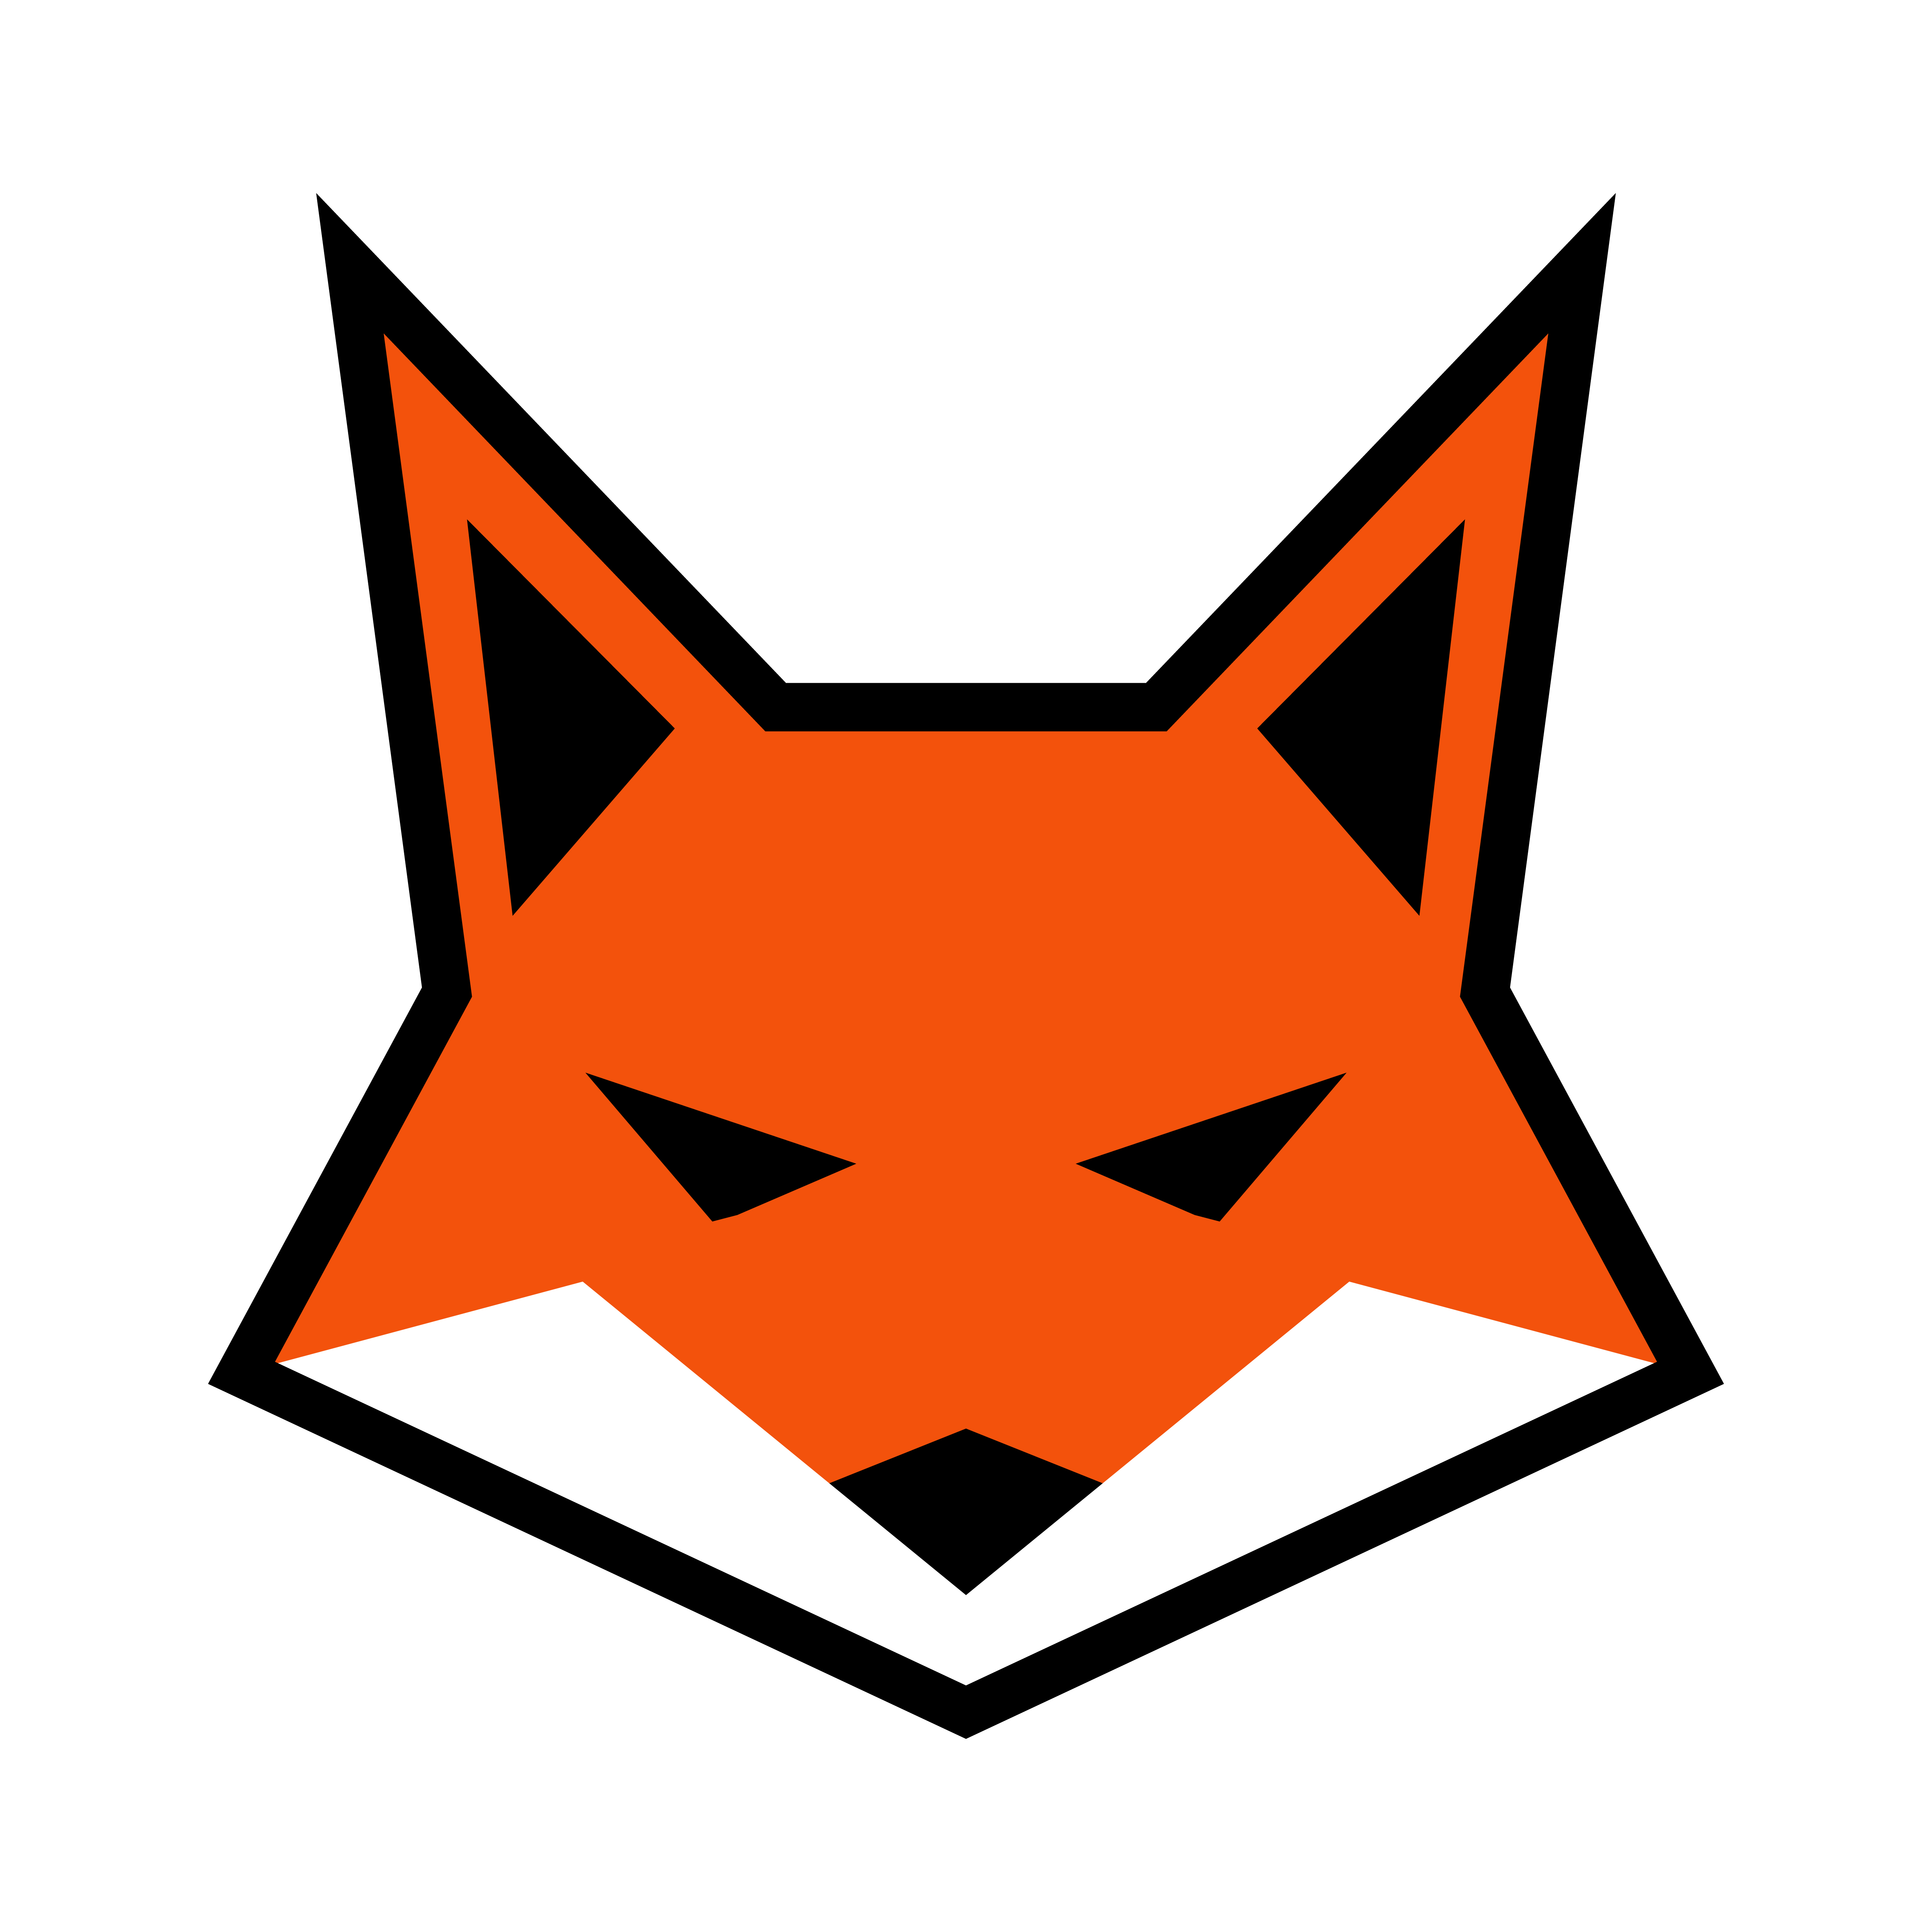 Download Fox face logo vector icon - Download Free Vectors, Clipart Graphics & Vector Art